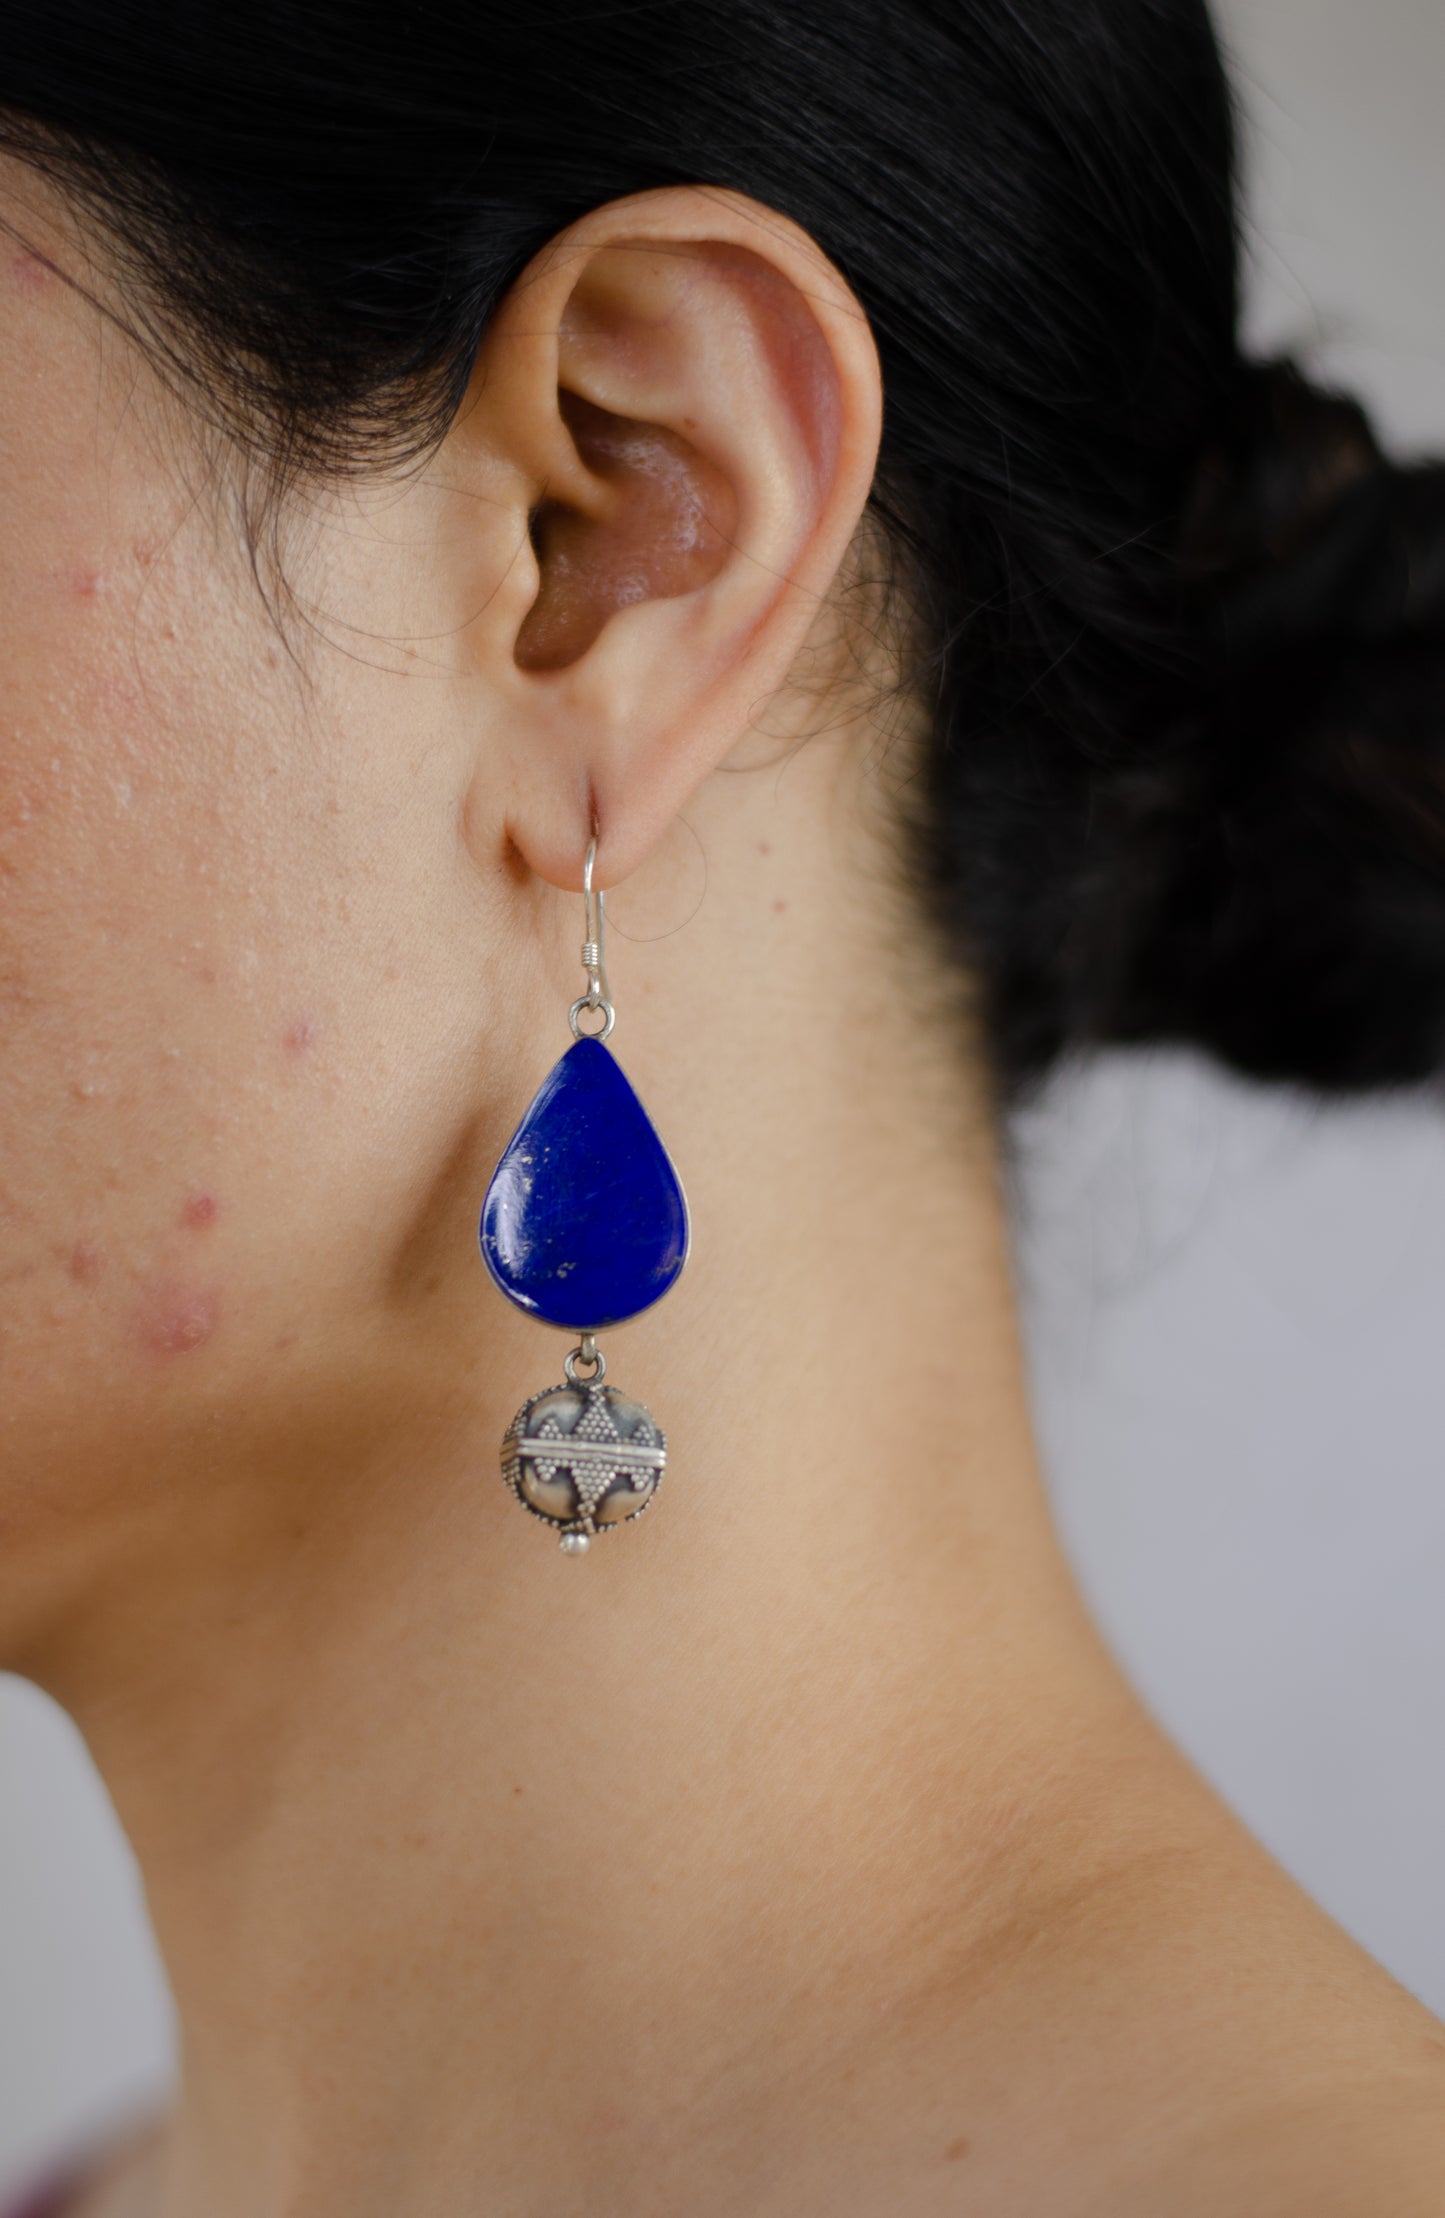 Handmade Silver  tone earrings with stone